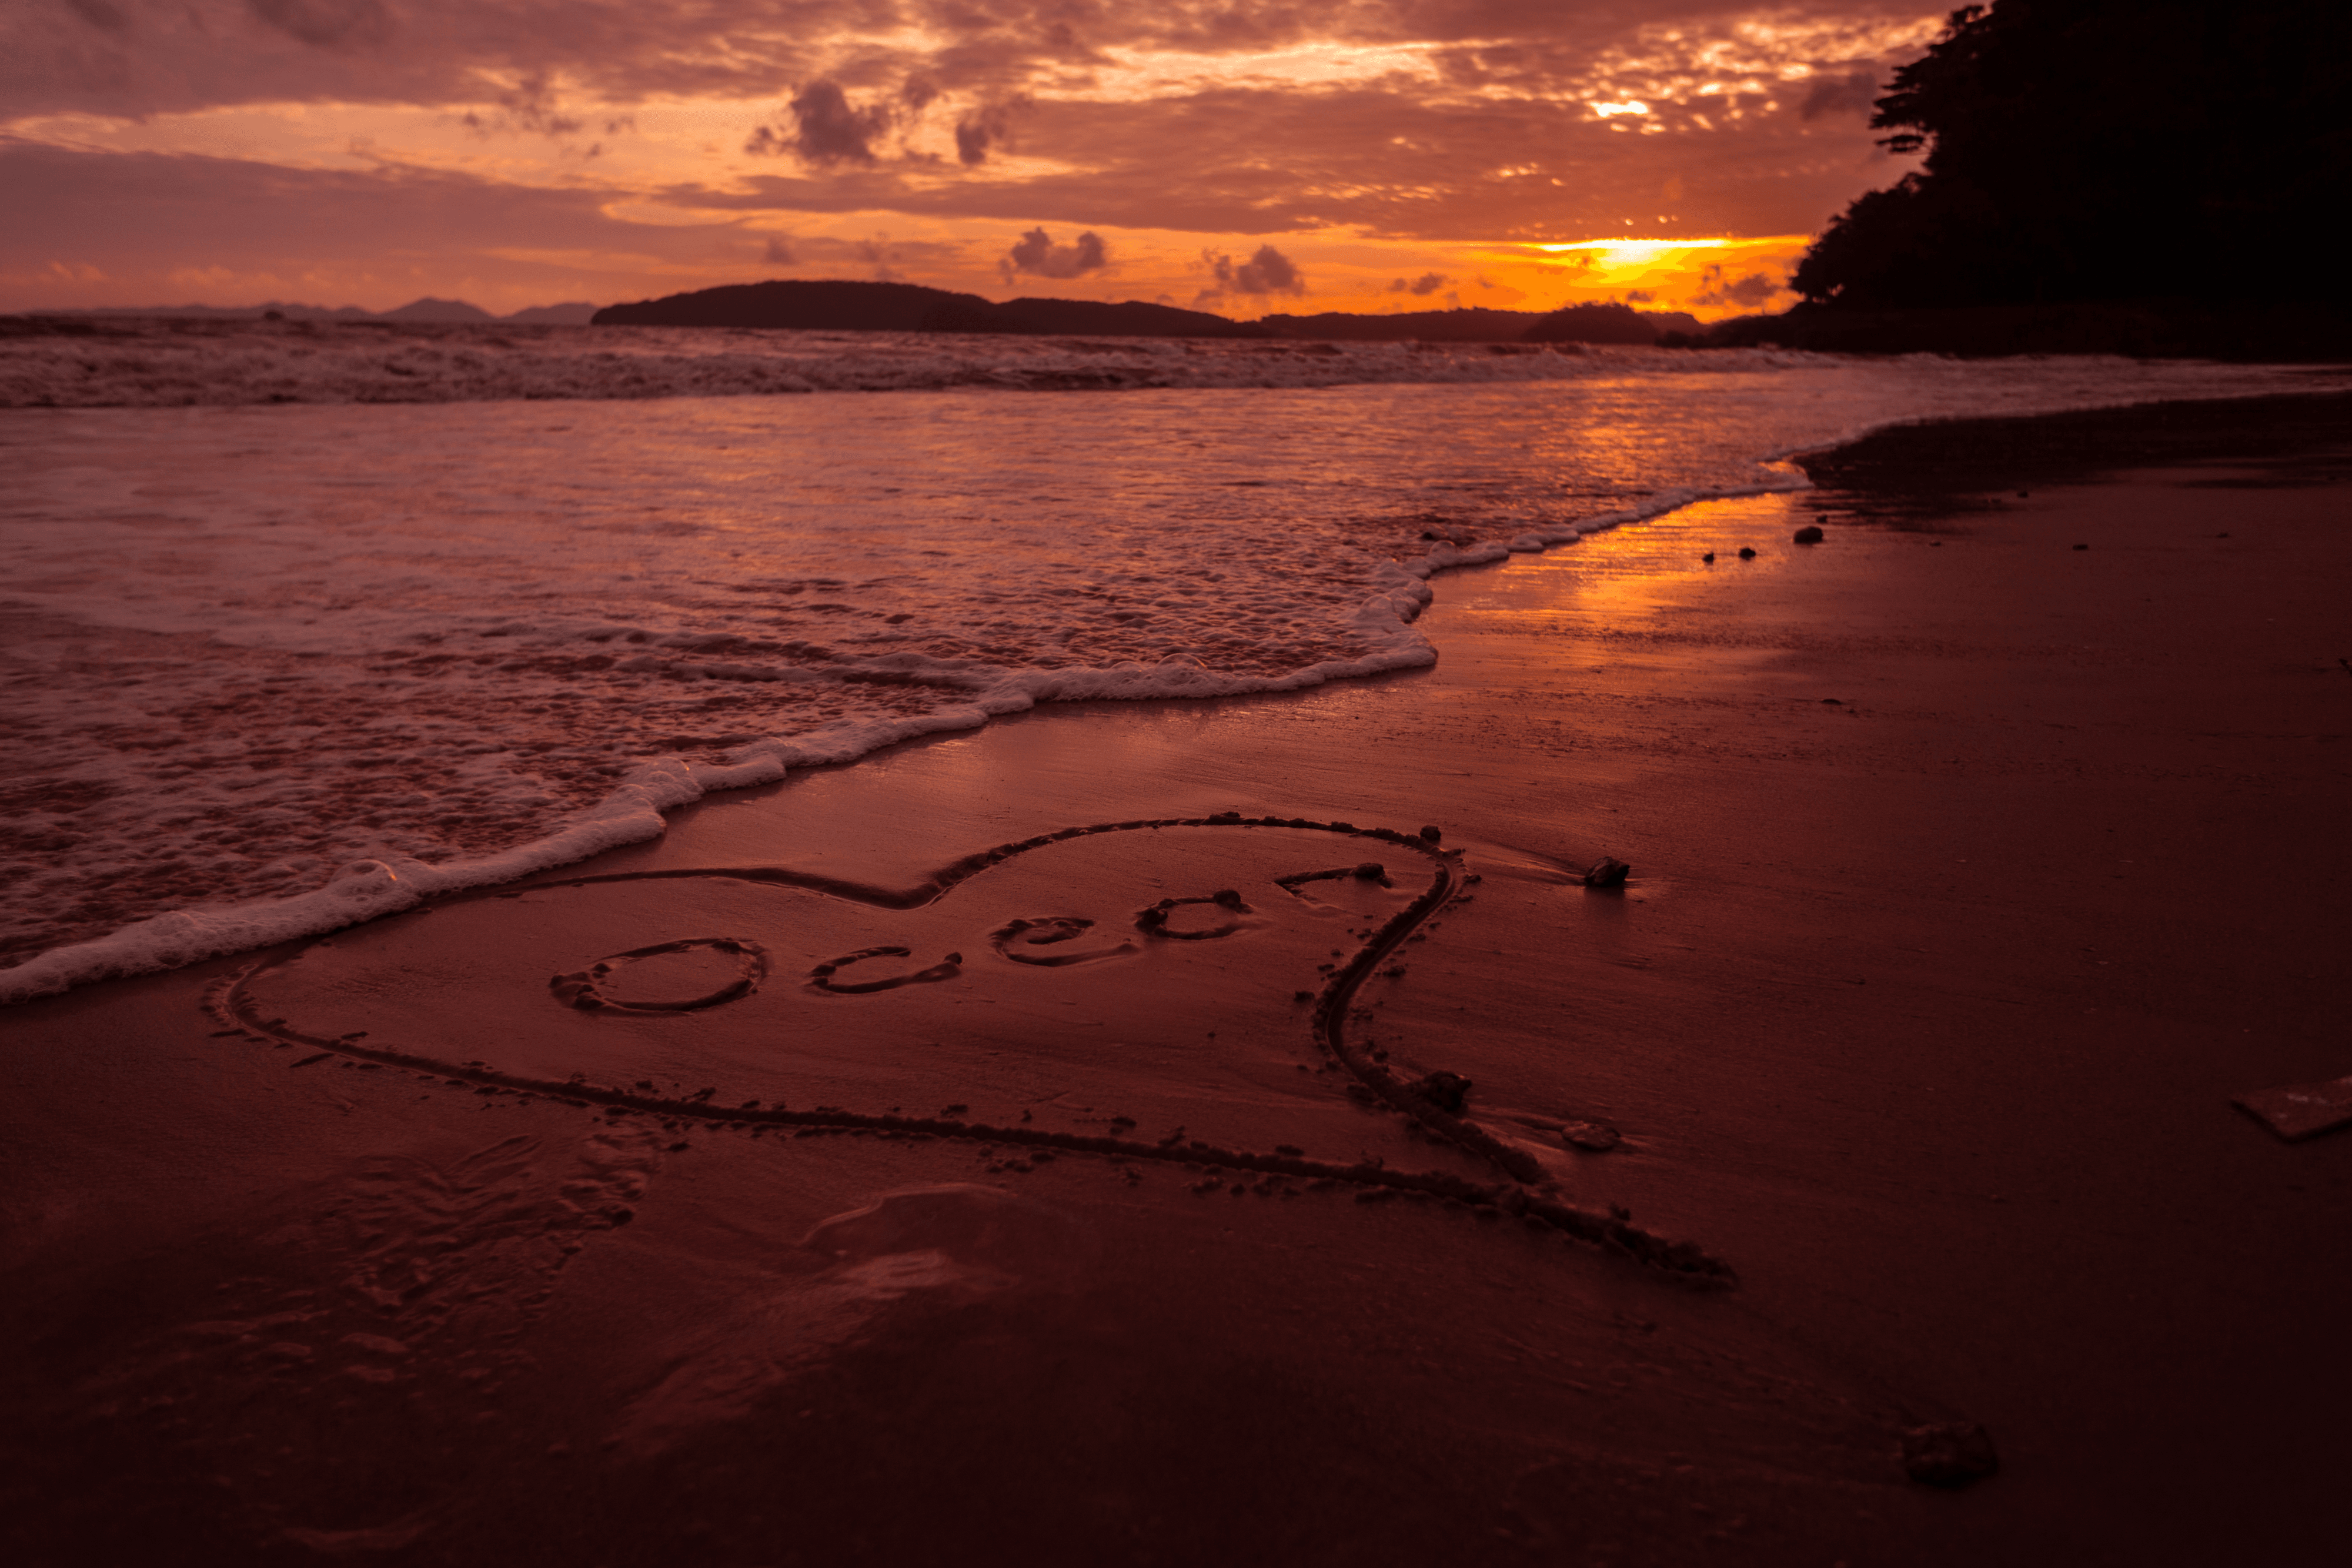 Ocean Love at Sunset